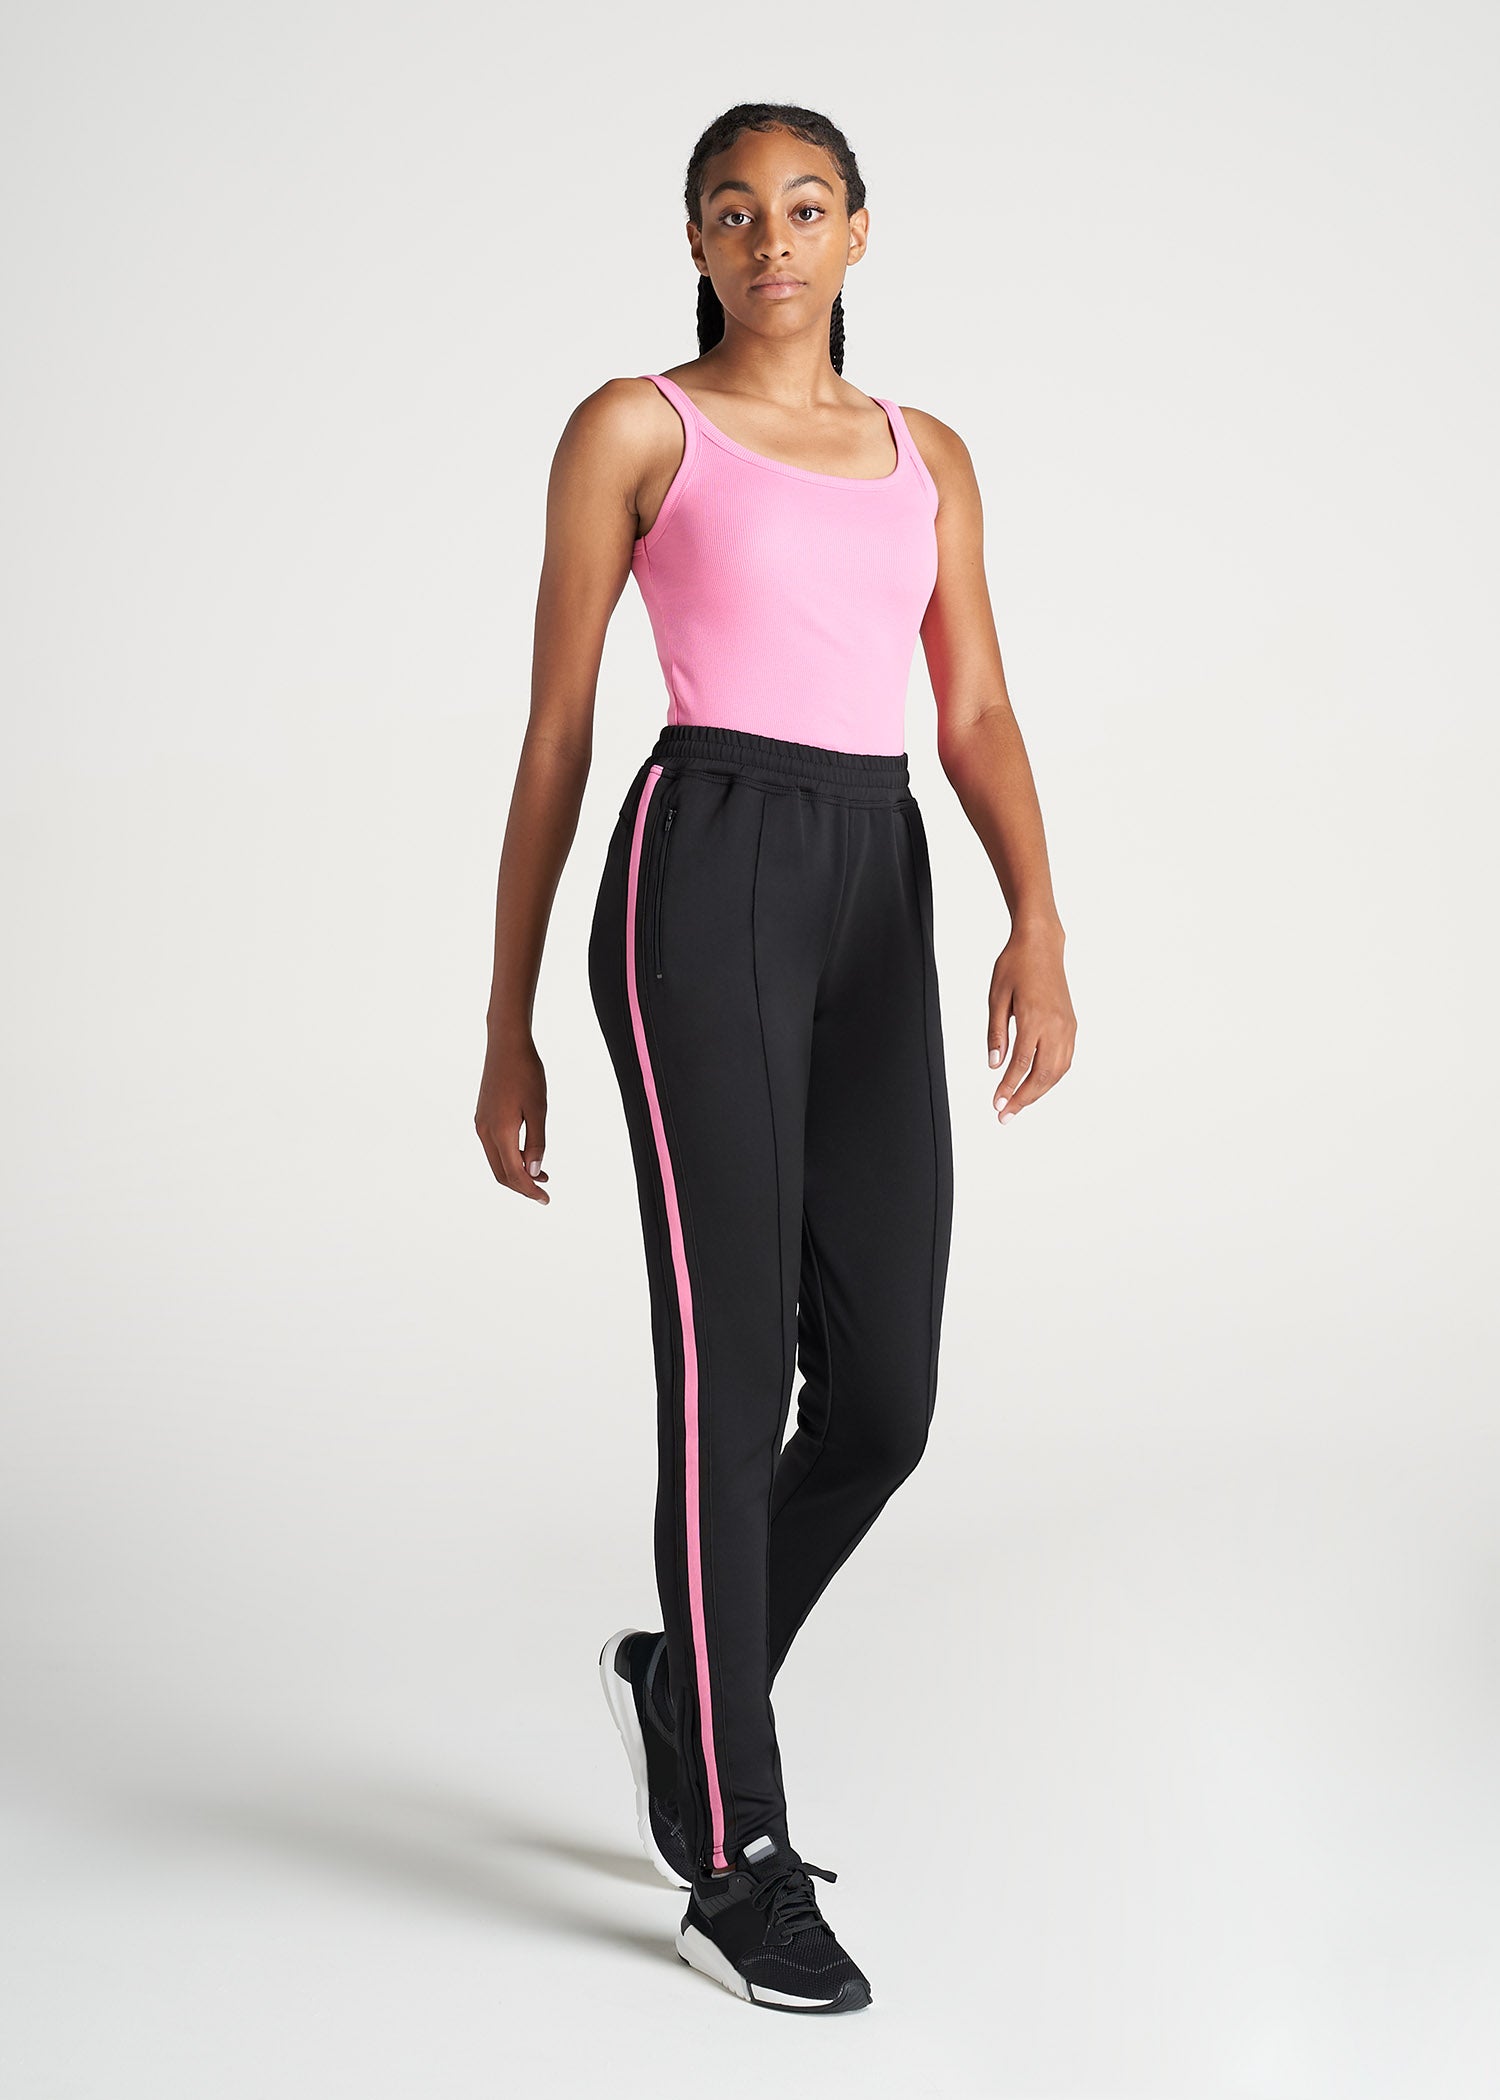 Tna Joggers Womens Size S Sweatpants Aritzia Lounge Workout Athletic Pink  New